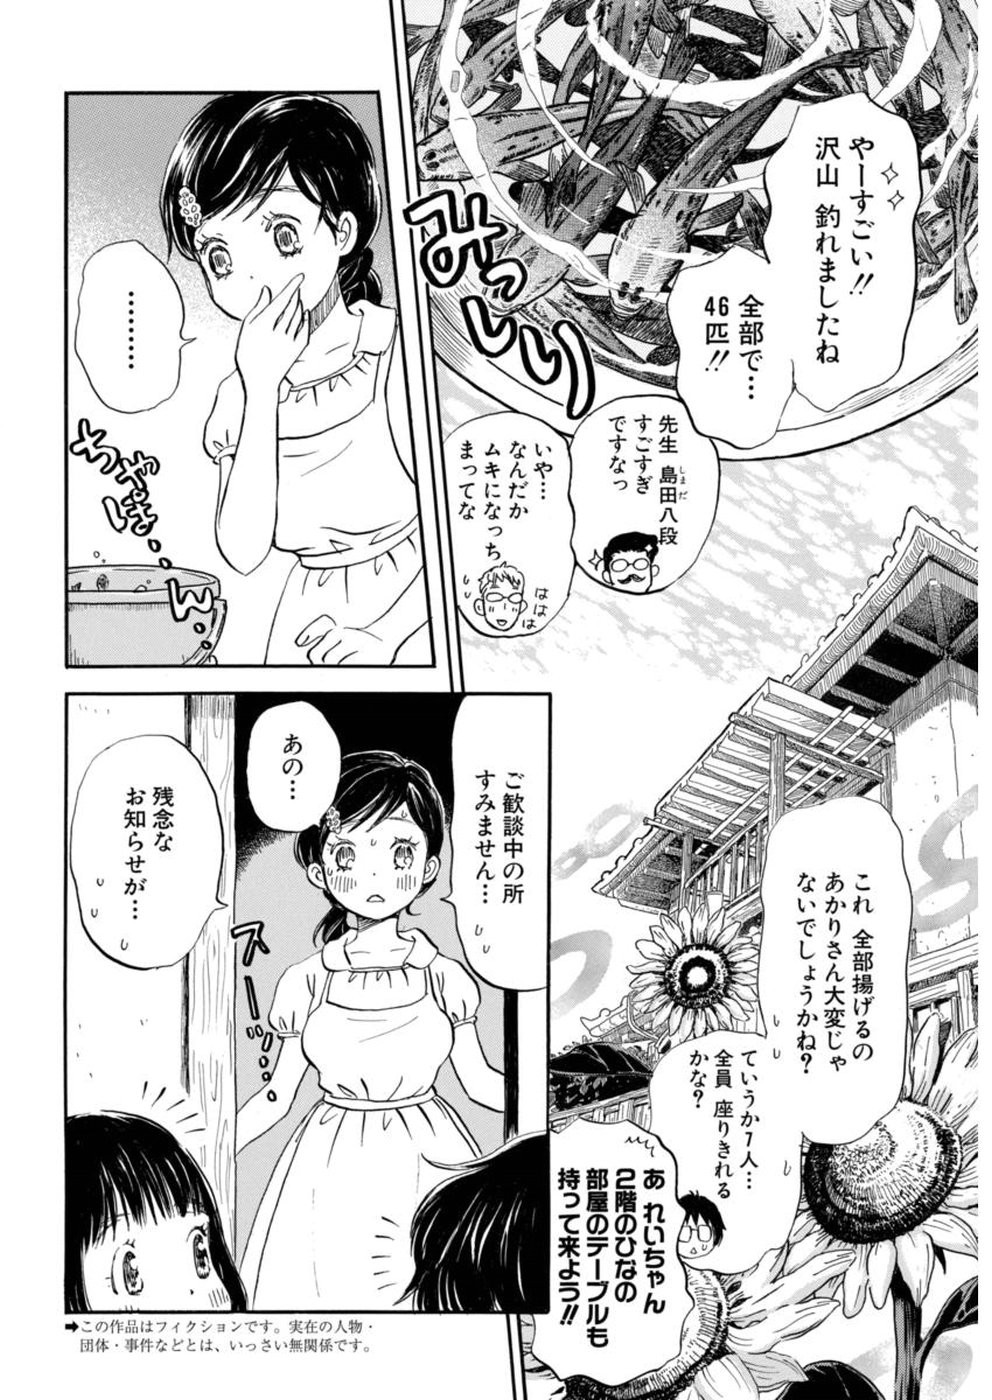 3 Gatsu no Lion - Chapter 146 - Page 2